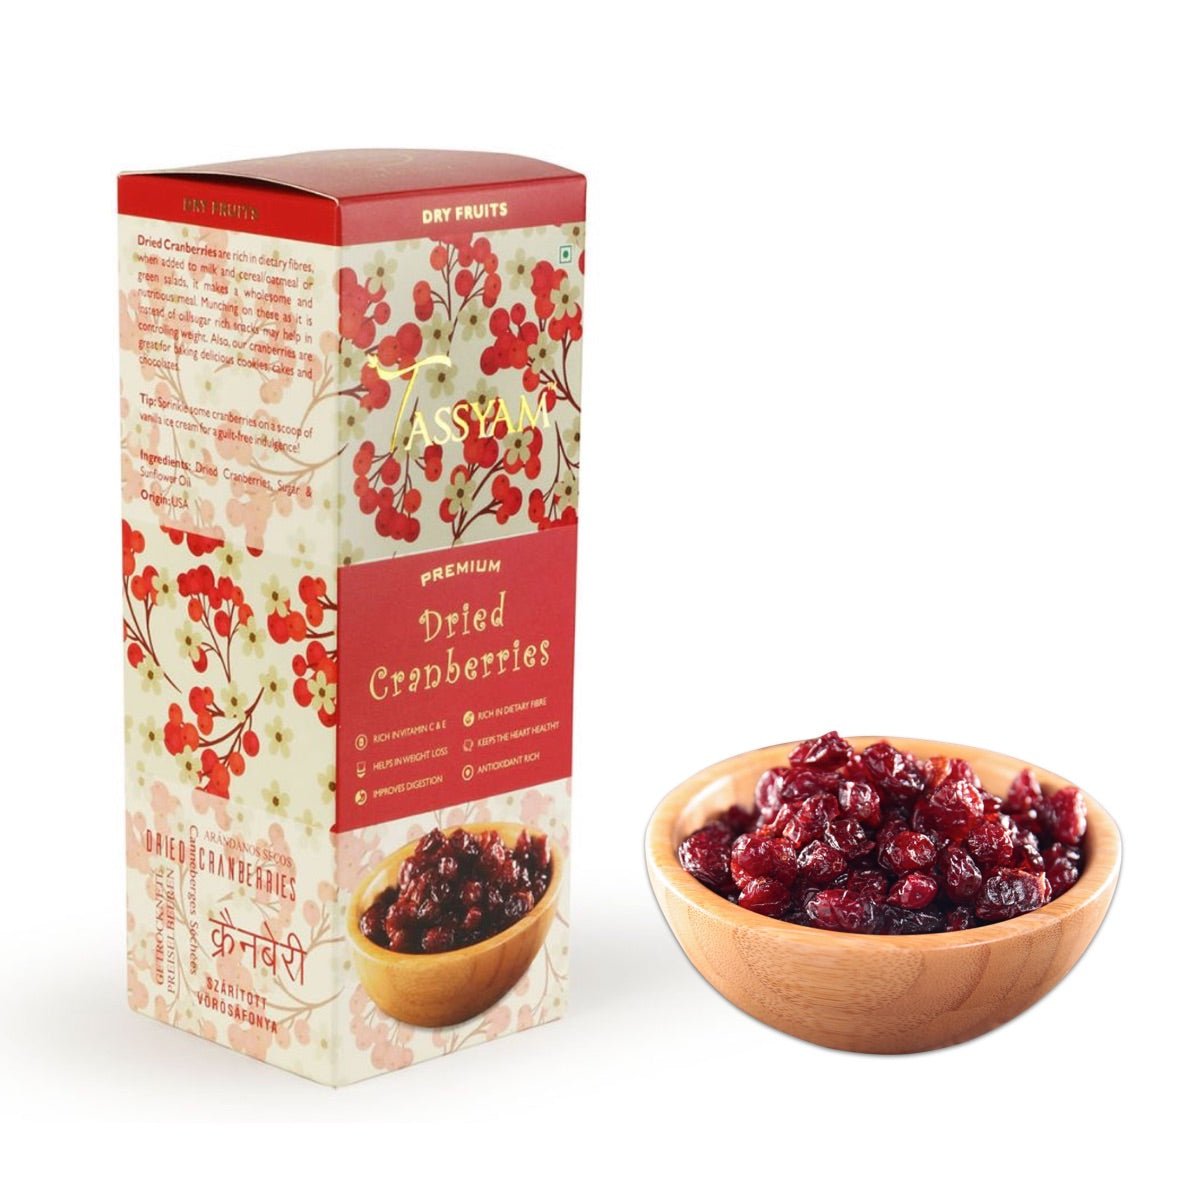 Premium Imported Dried Cranberries - Tassyam Organics